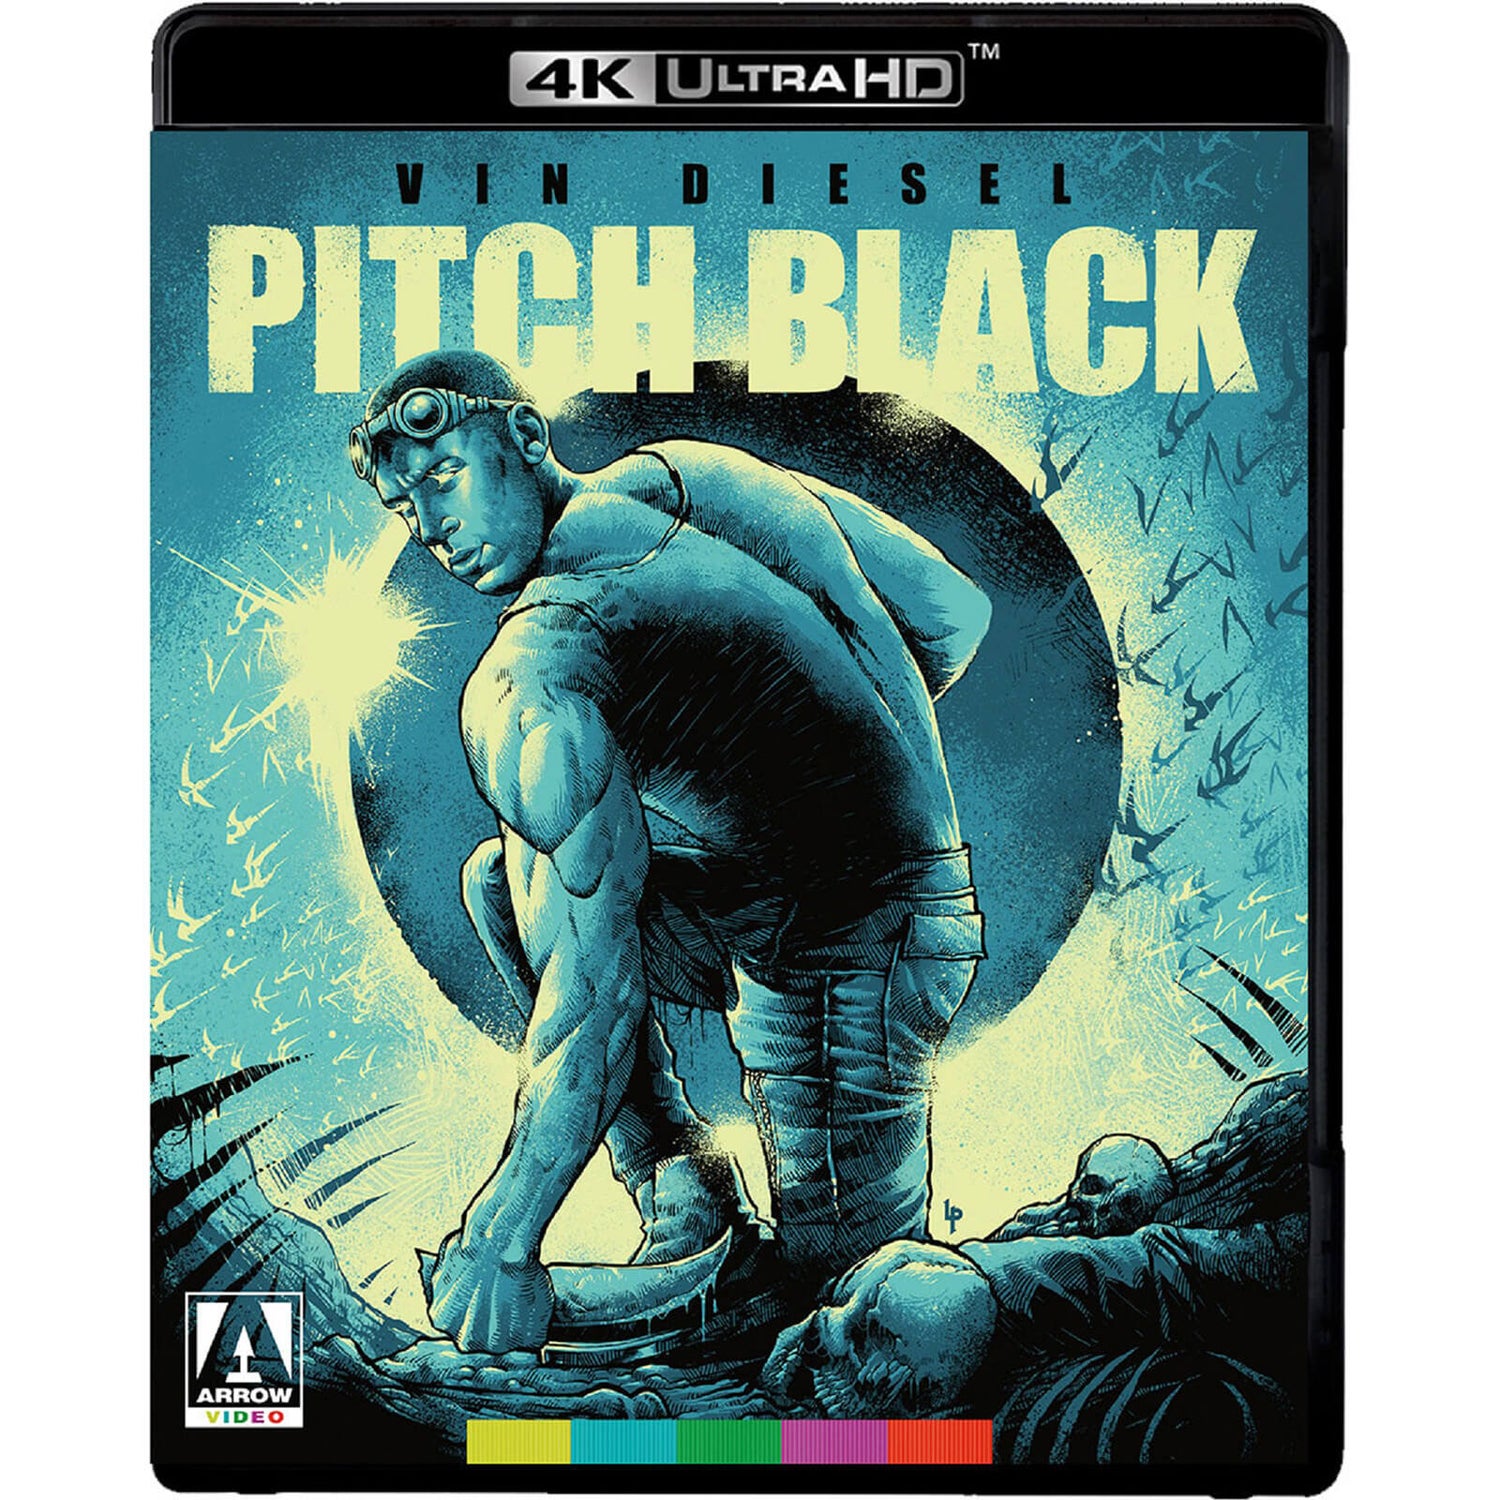 Pitch Black 4K UHD